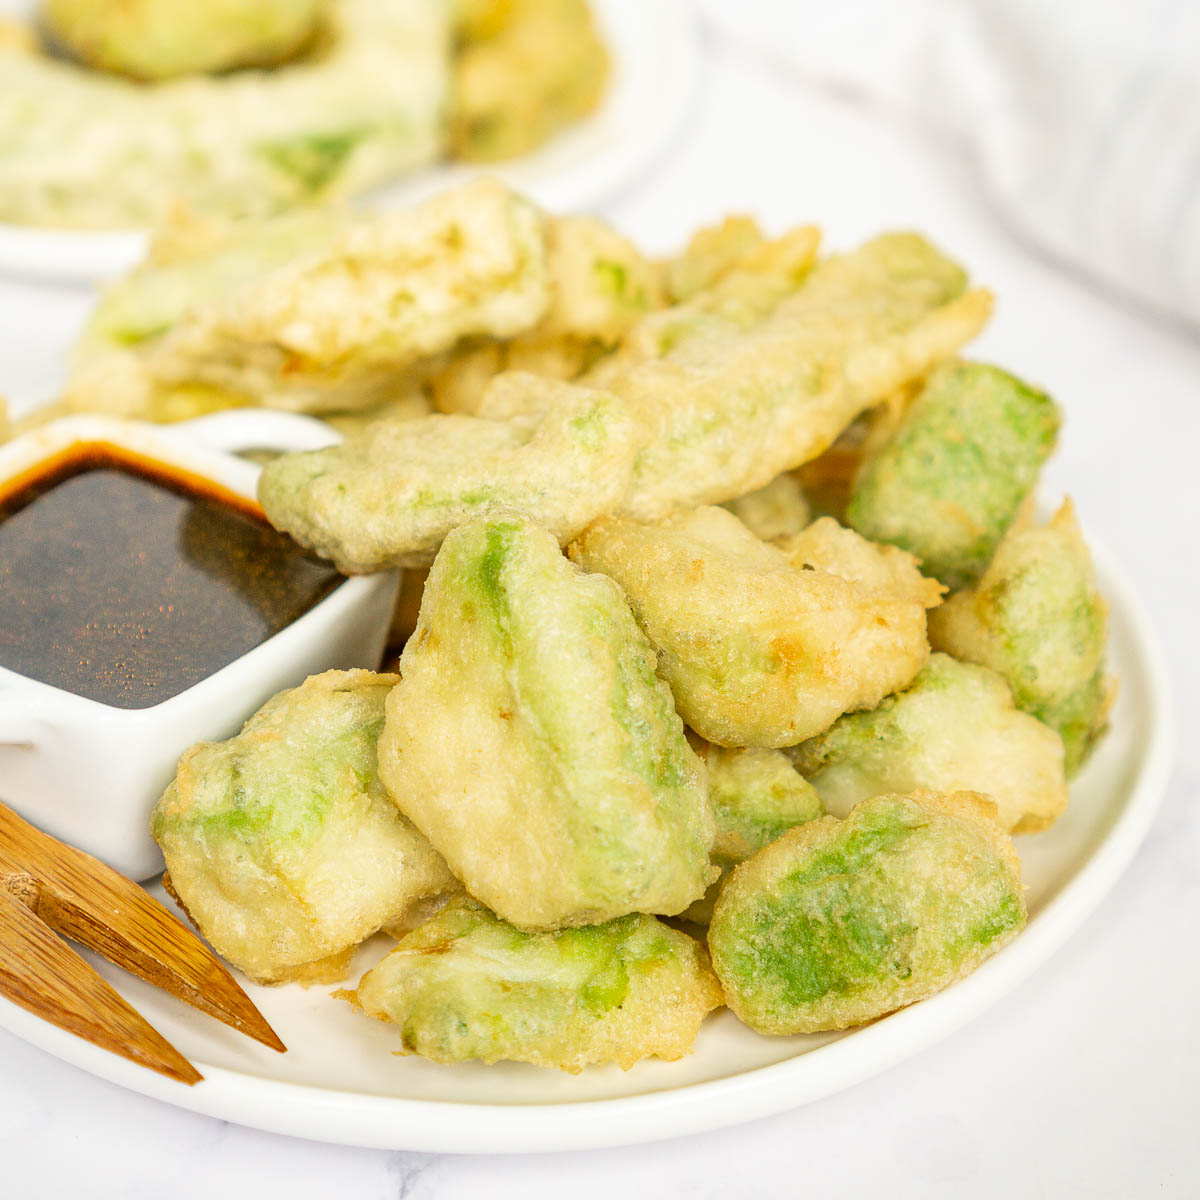 Avocado tempura pieces on a plate